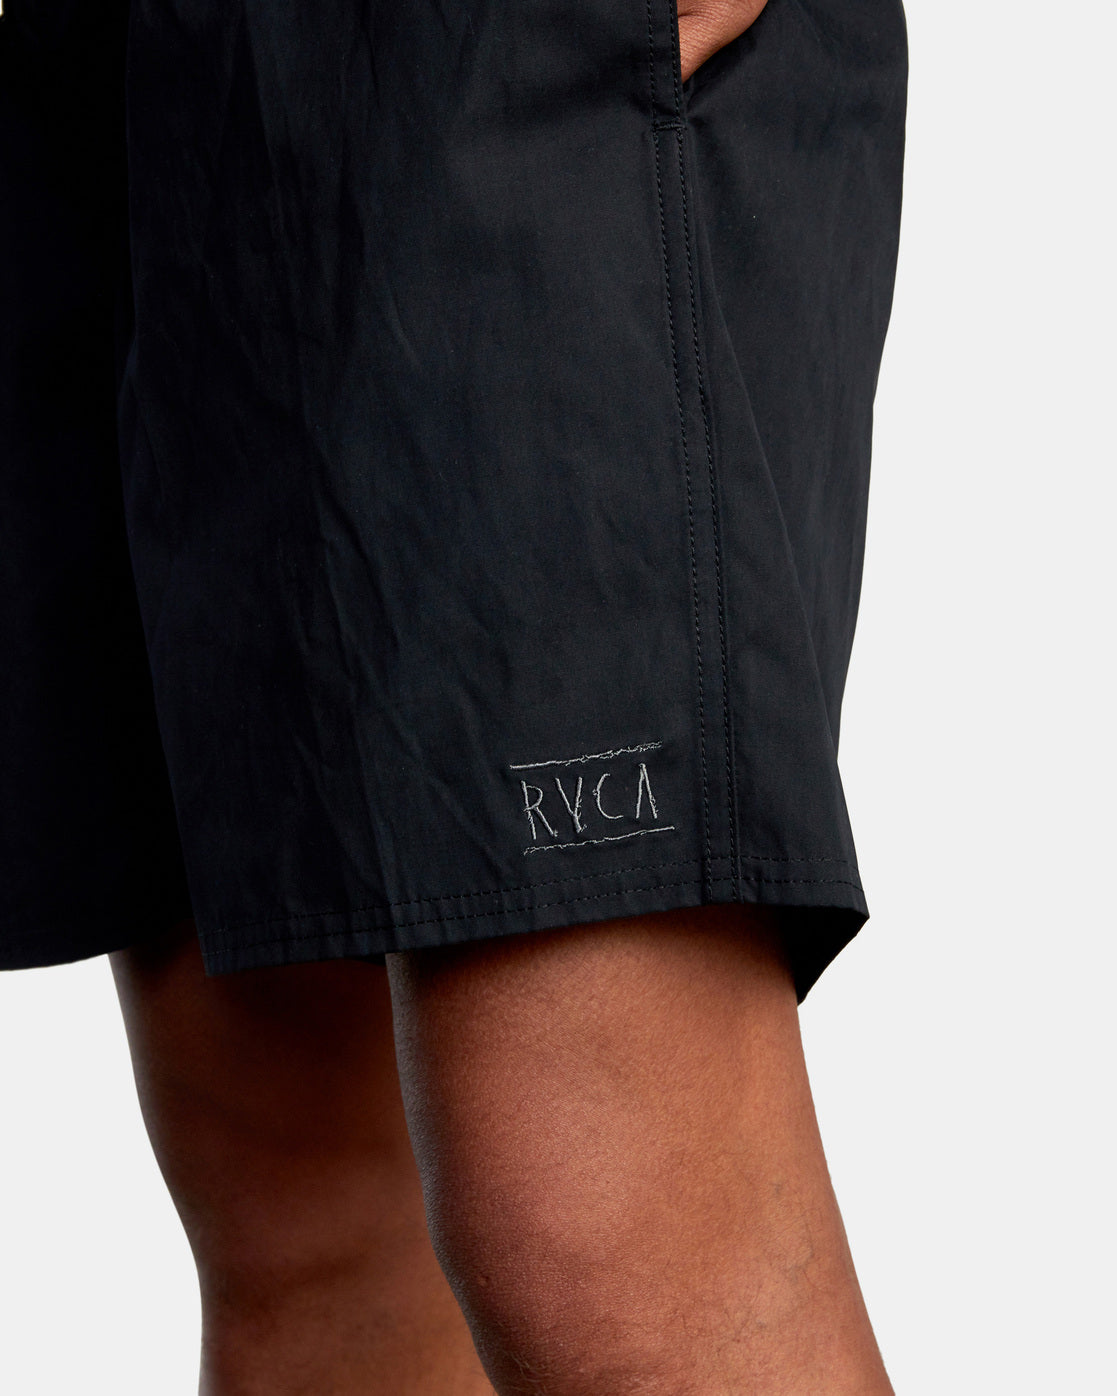 RVCA Opposites Shorts